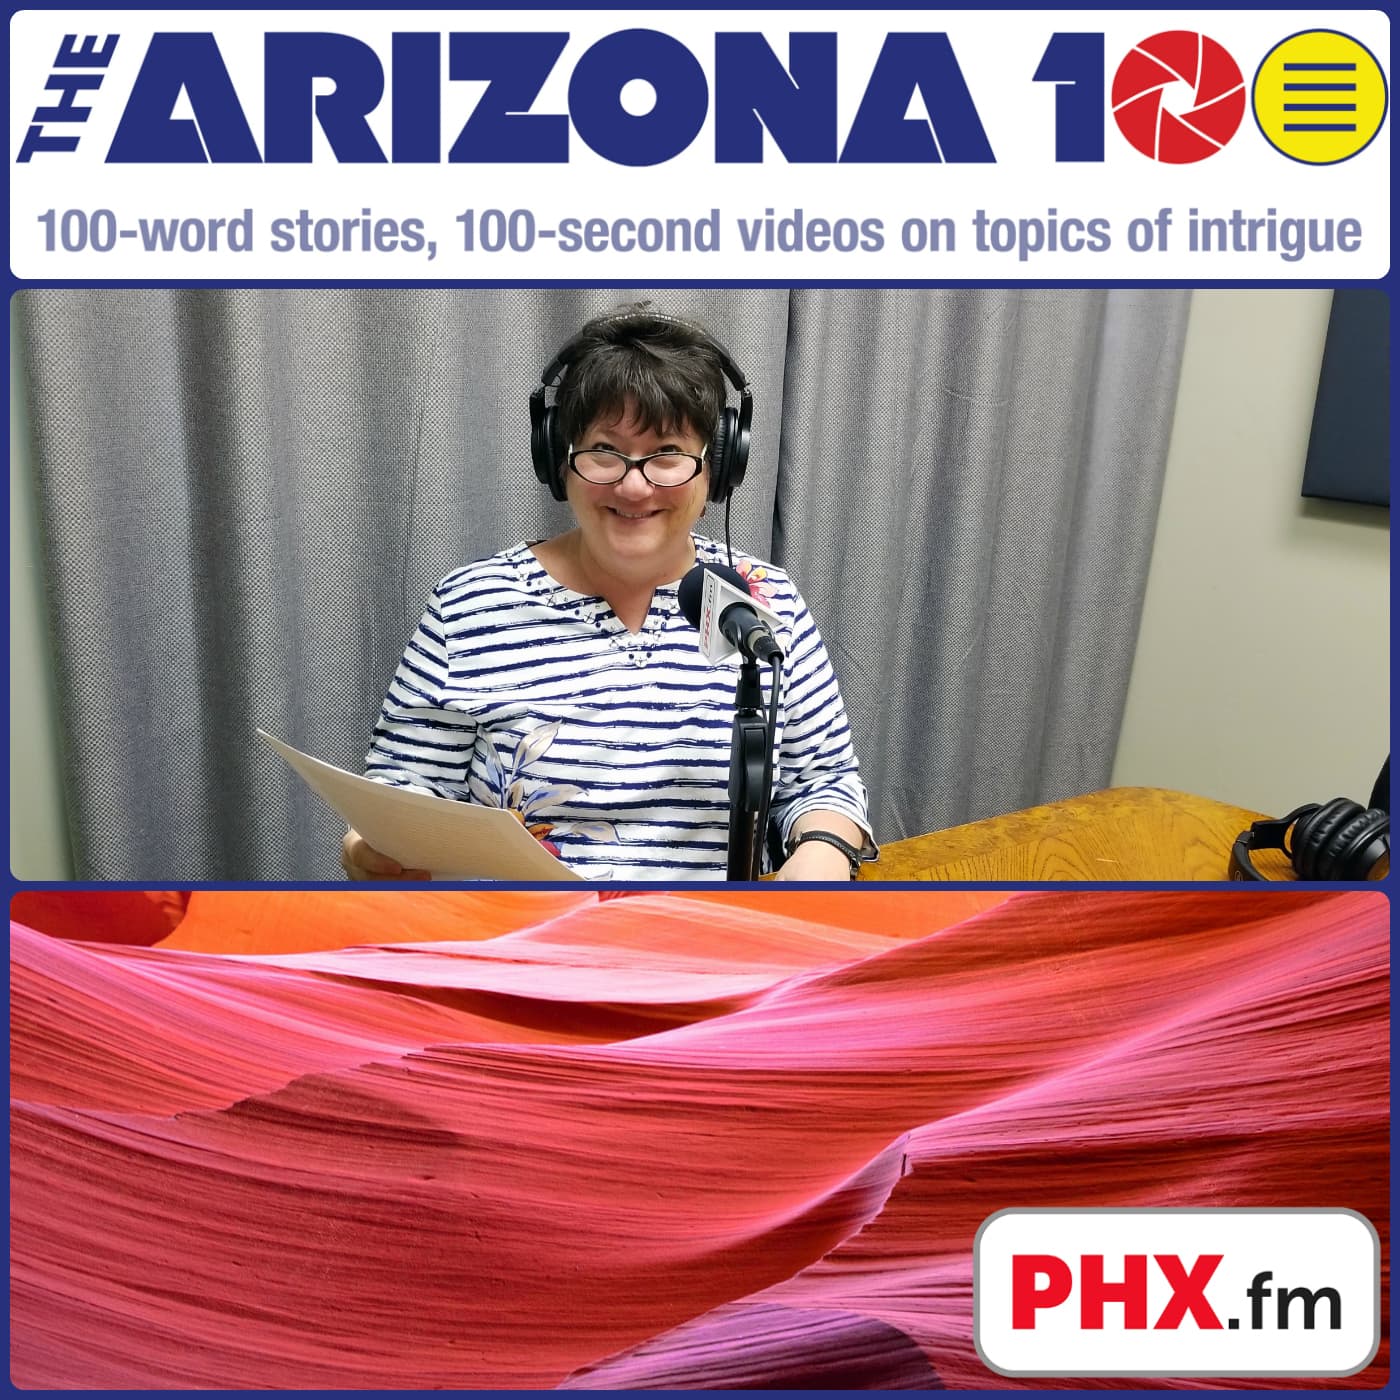 Artwork for podcast The Arizona 100